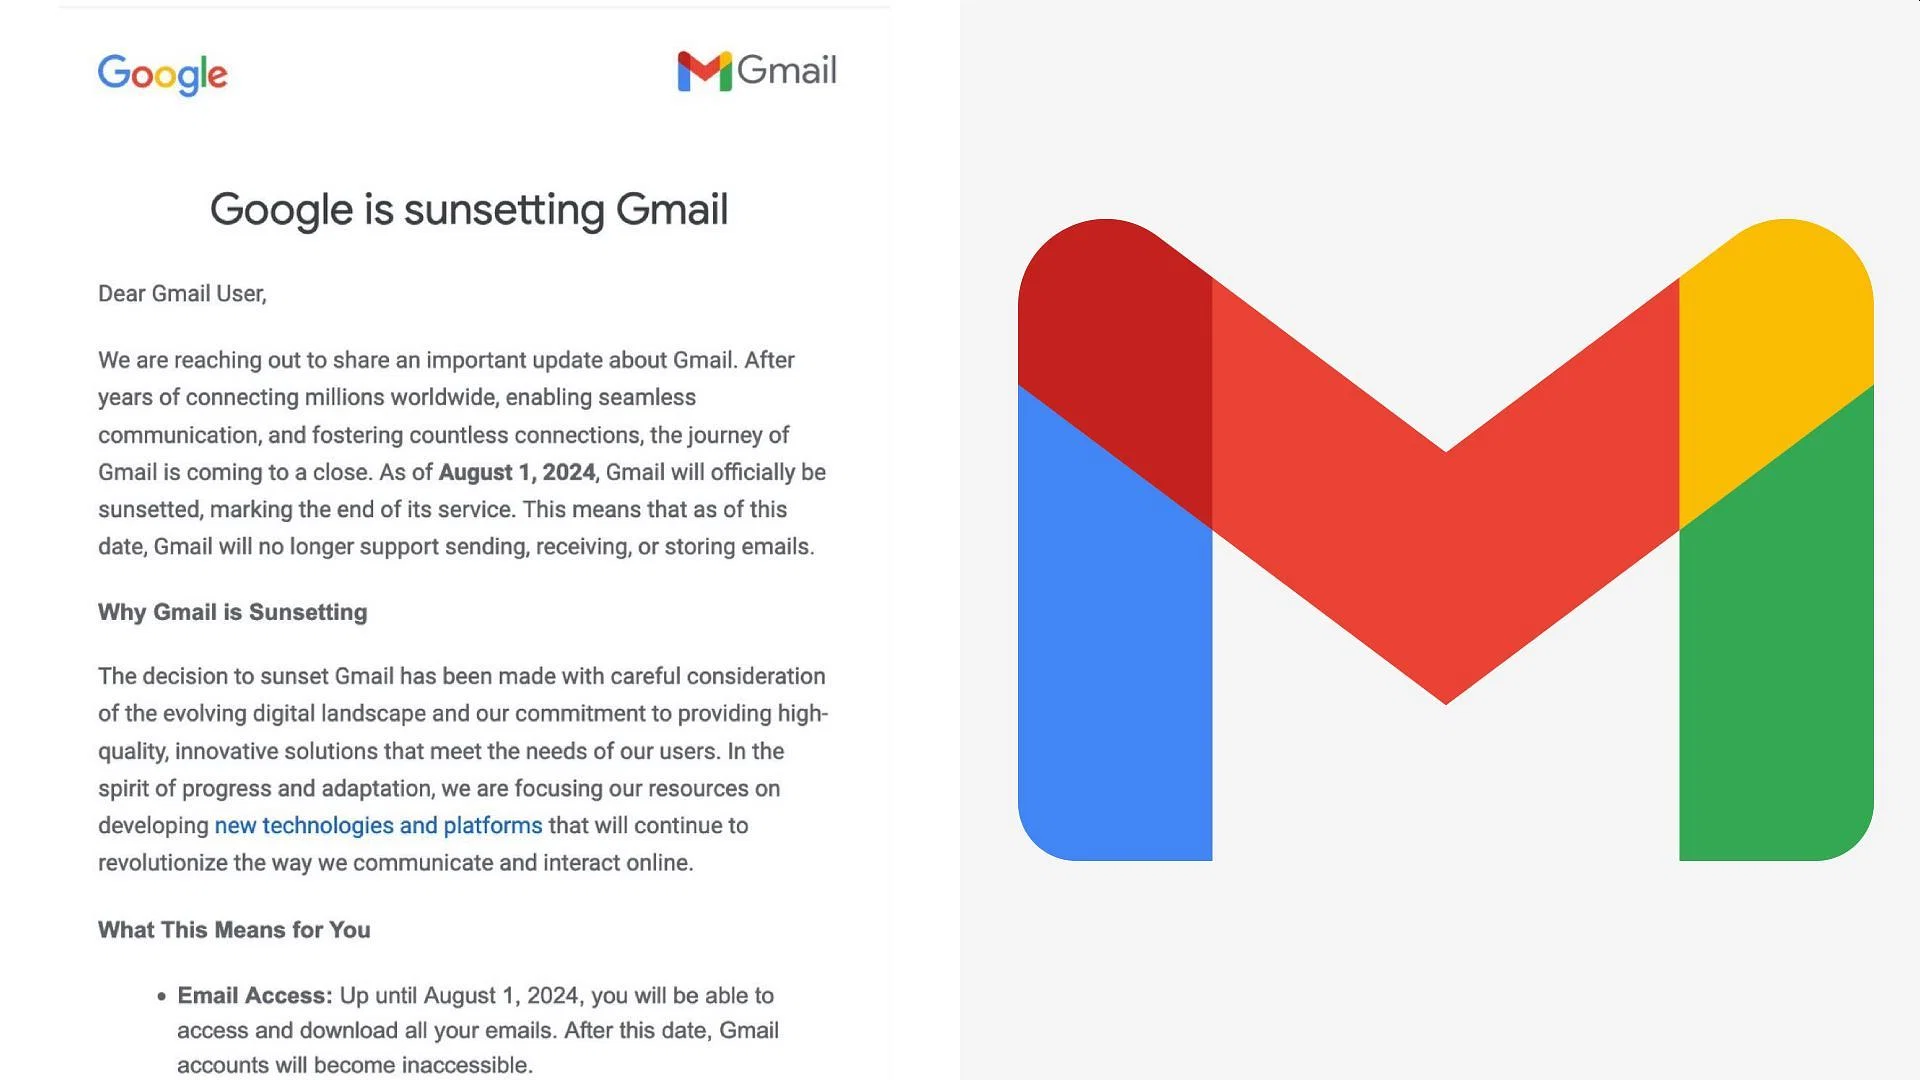 XMail：埃隆·马斯克表示，Gmail 的替代品 Xmail 即将推出，尽管有 Gmail 关闭的传言